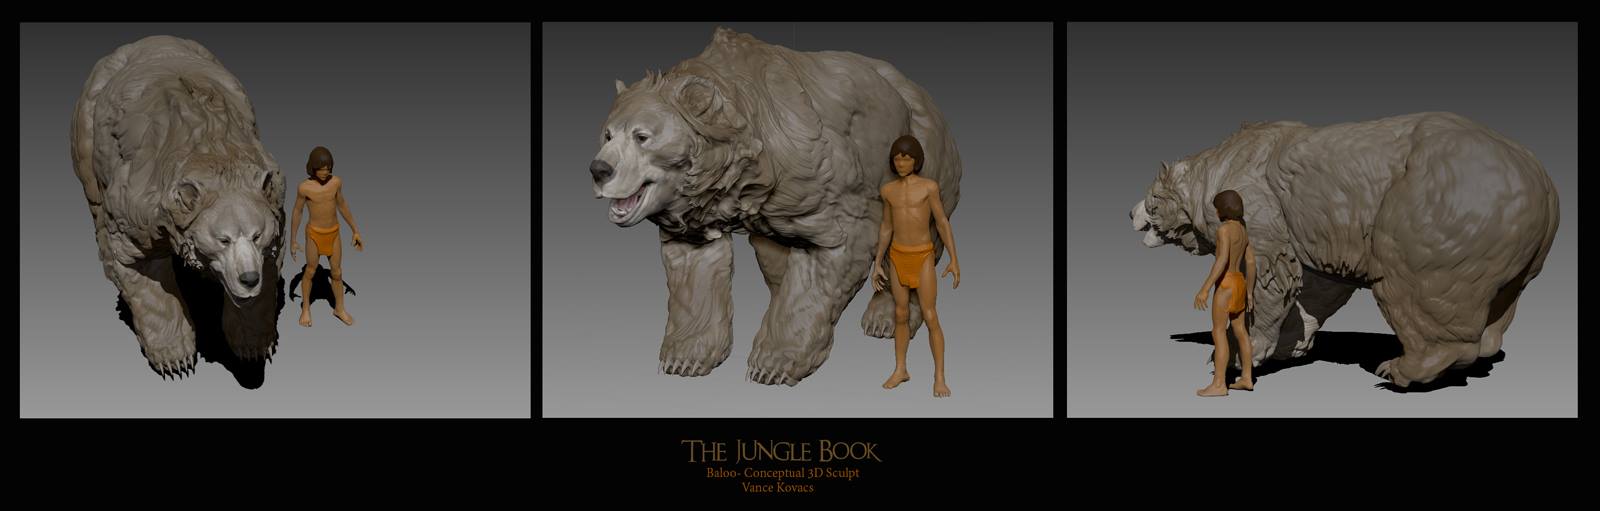 the_jungle_book_concept_art_vance_kovacs_11.jpg